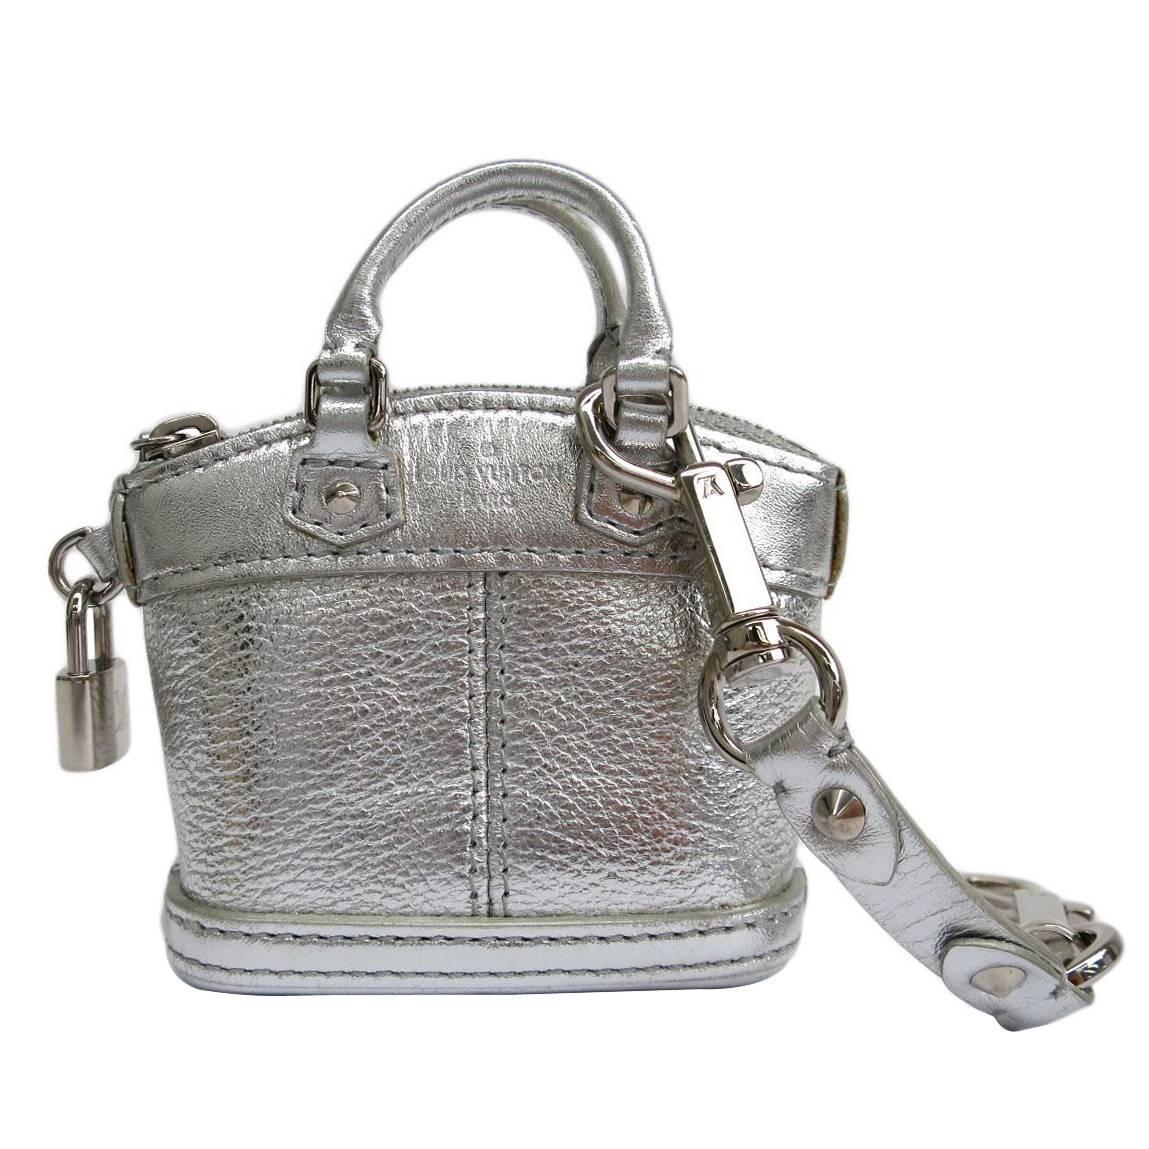 Louis Vuitton Silver Metallic Lockit Mini Handbag Keychain Bag Charm in Box at 1stdibs